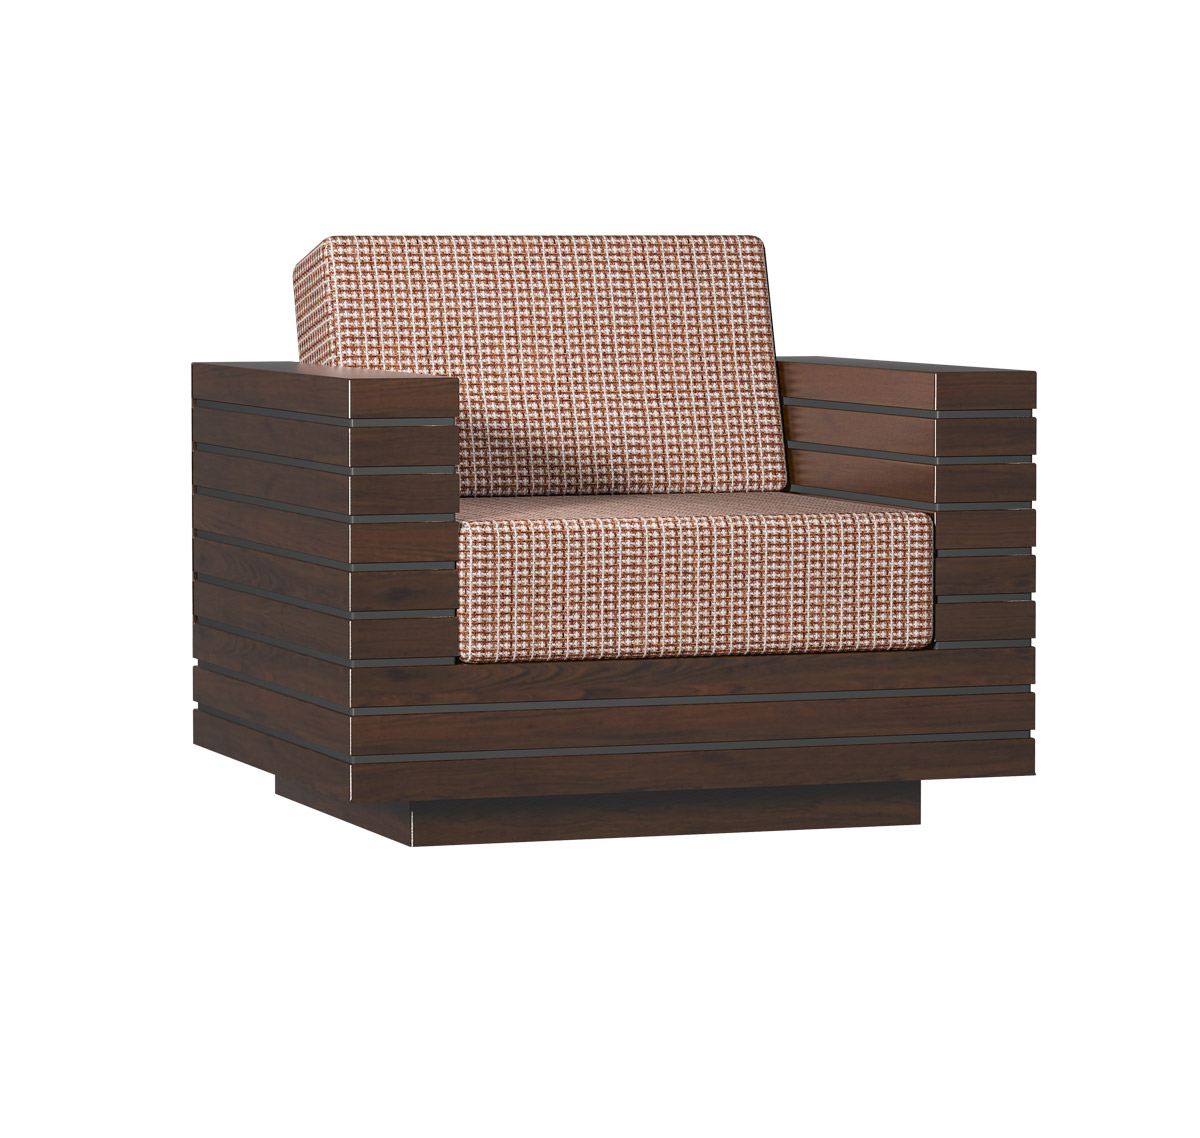 Wooden Sofa SSC-315-3-1-20(Classic)